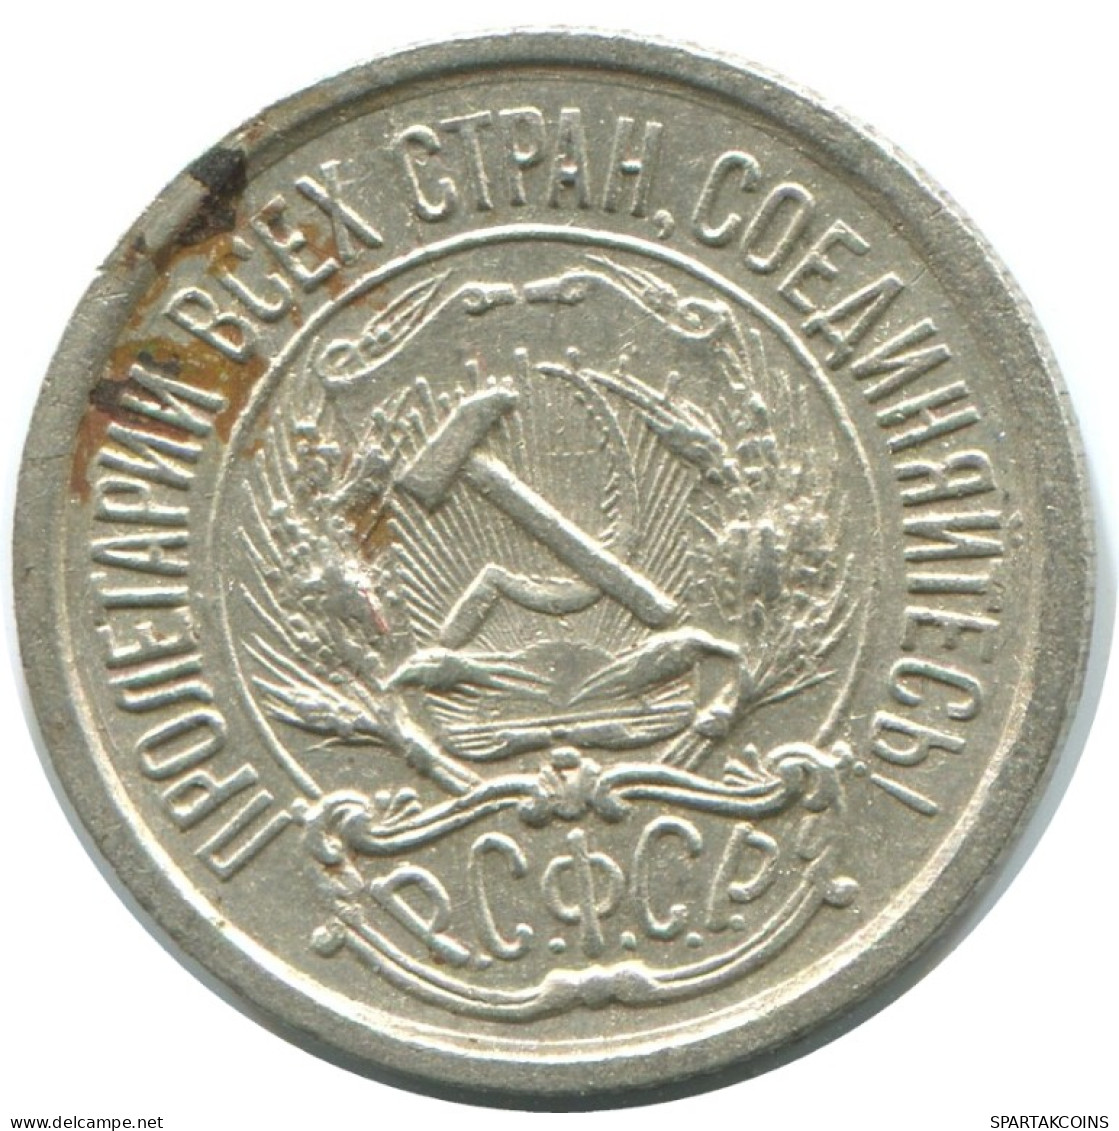 10 KOPEKS 1923 RUSSIA RSFSR SILVER Coin HIGH GRADE #AE887.4.U.A - Russland